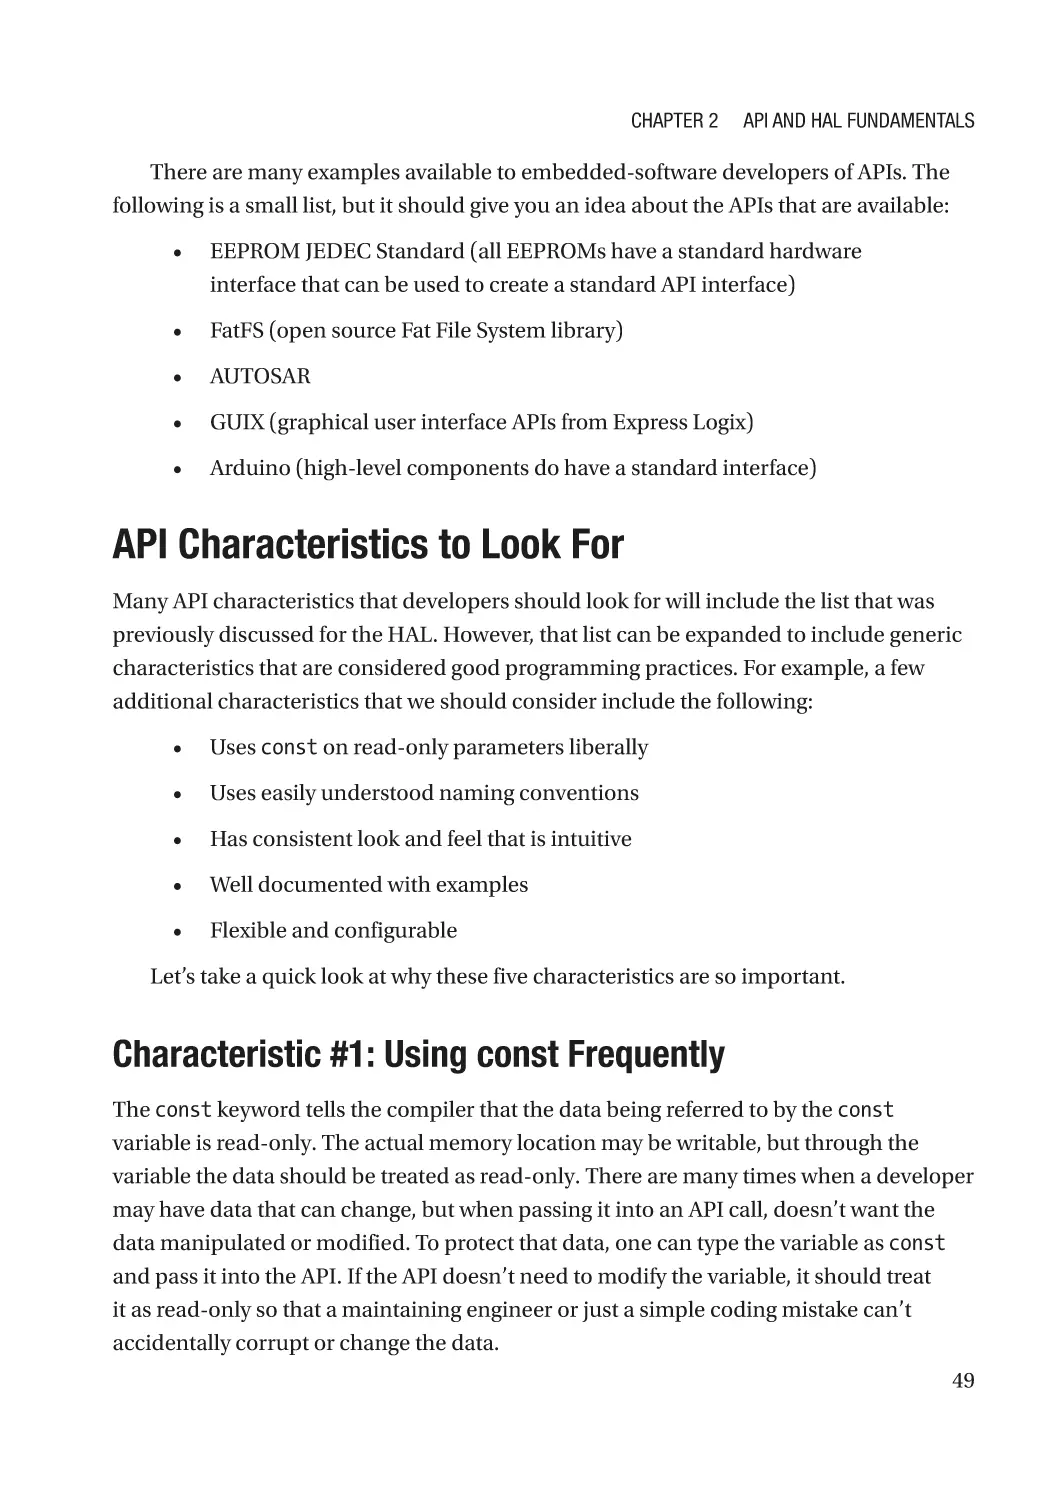 API Characteristics to Look For
Characteristic #1